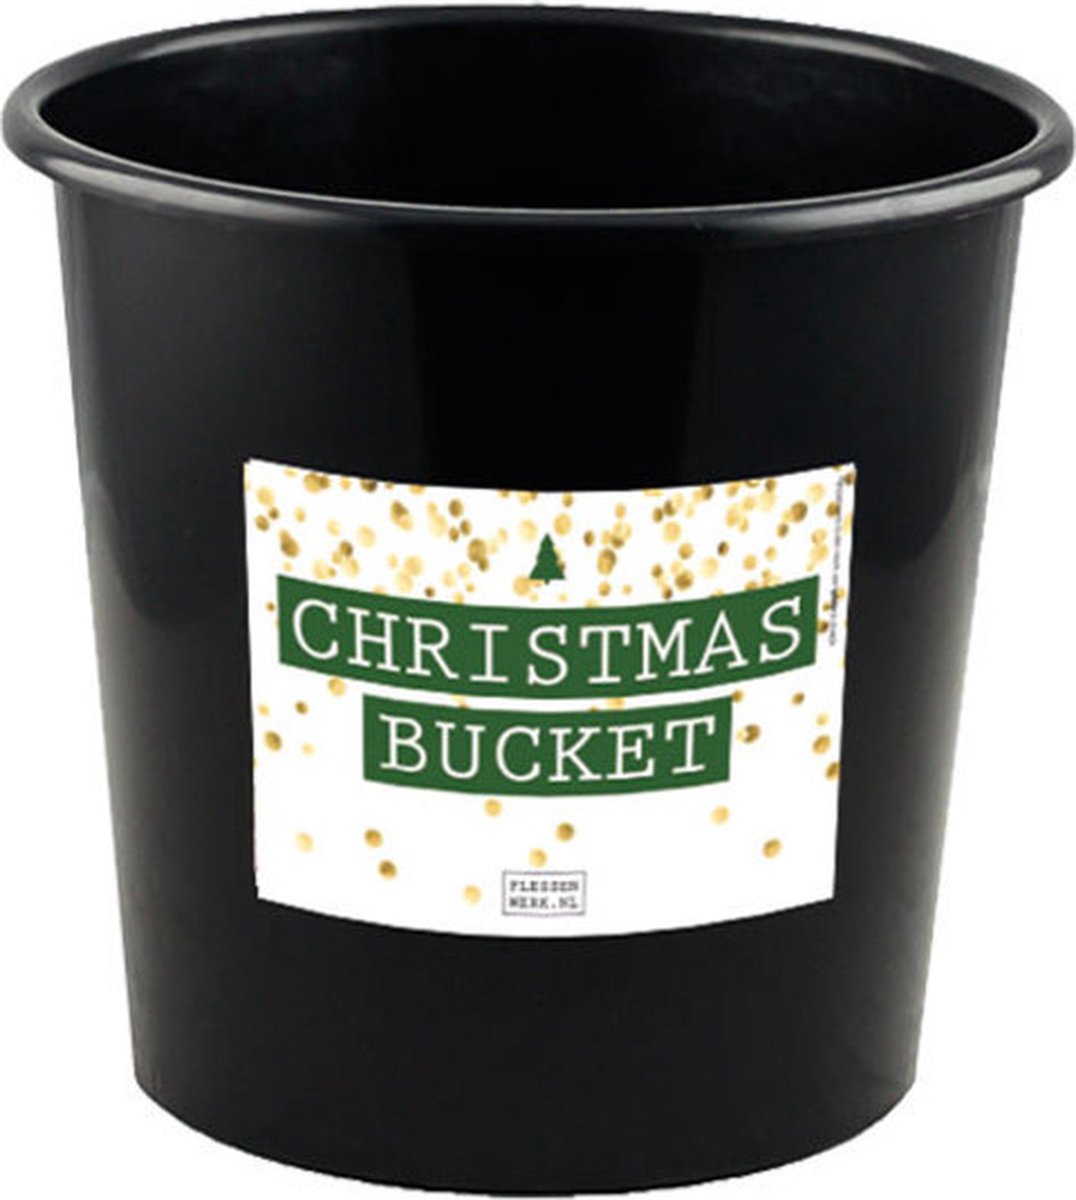 Christmas bucket - klein (3 liter) - per 12 stuks